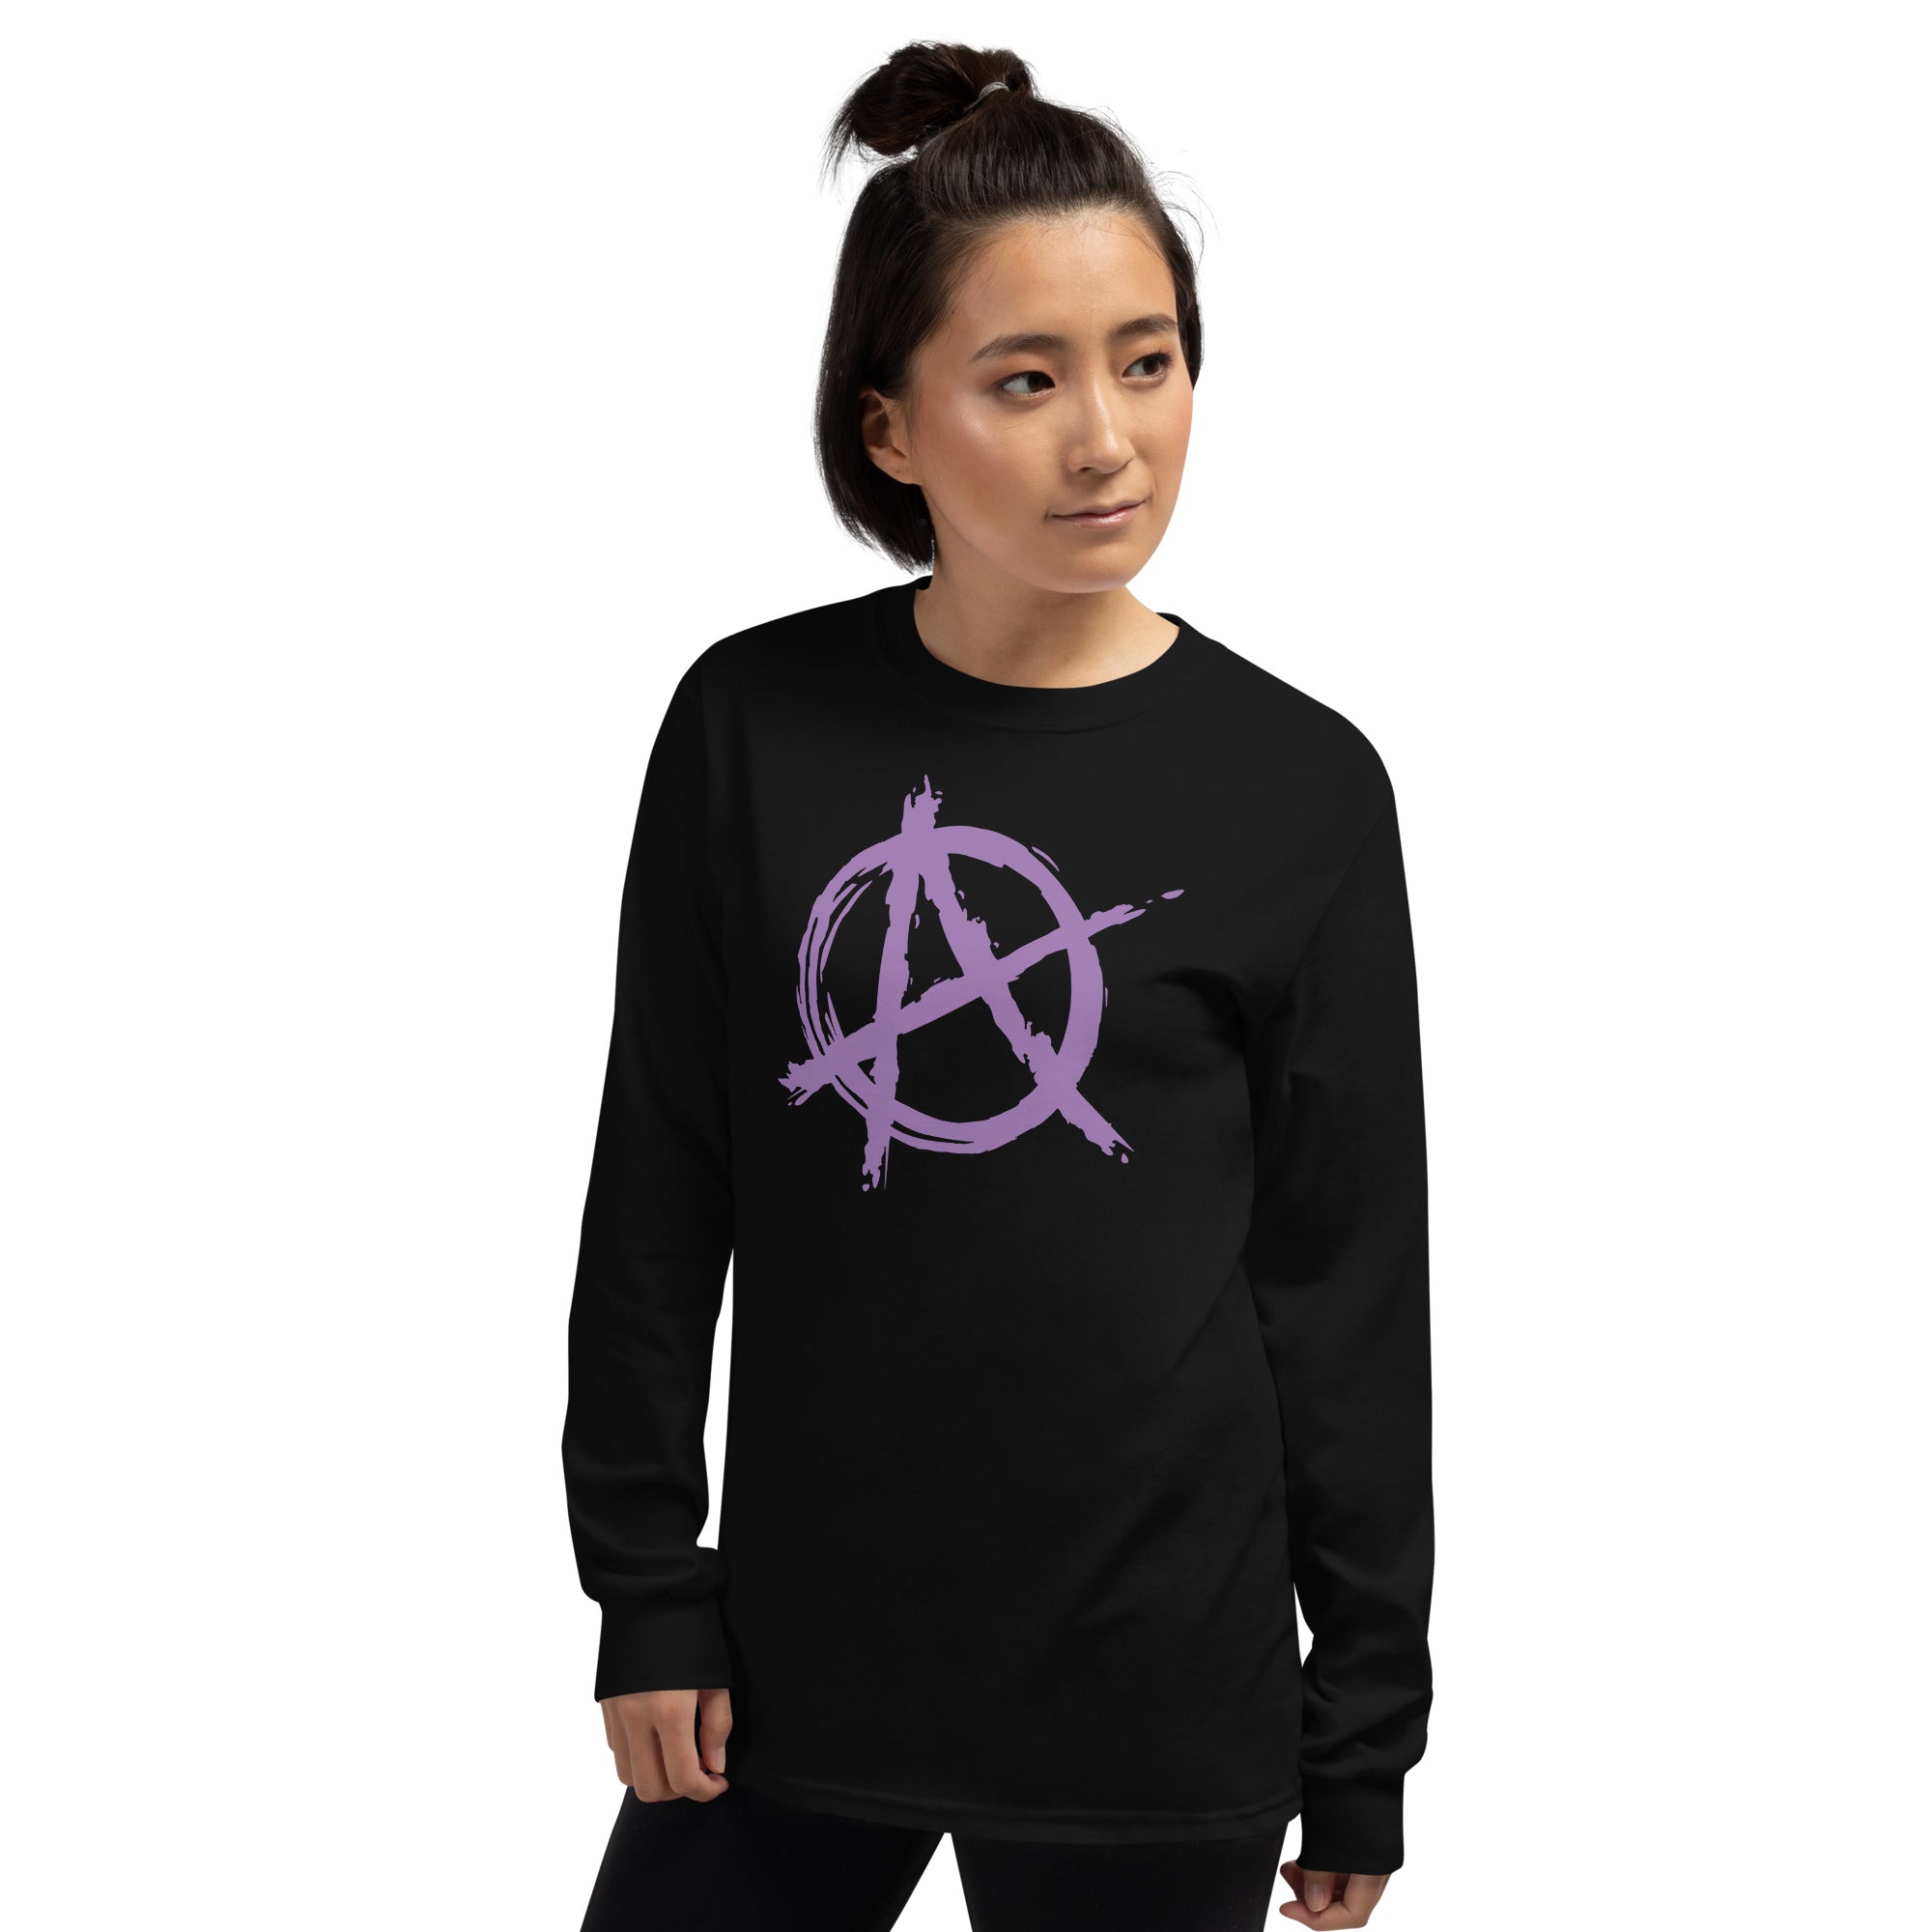 Purple Anarchy is Order Symbol Punk Rock Long Sleeve Shirt - Edge of Life Designs